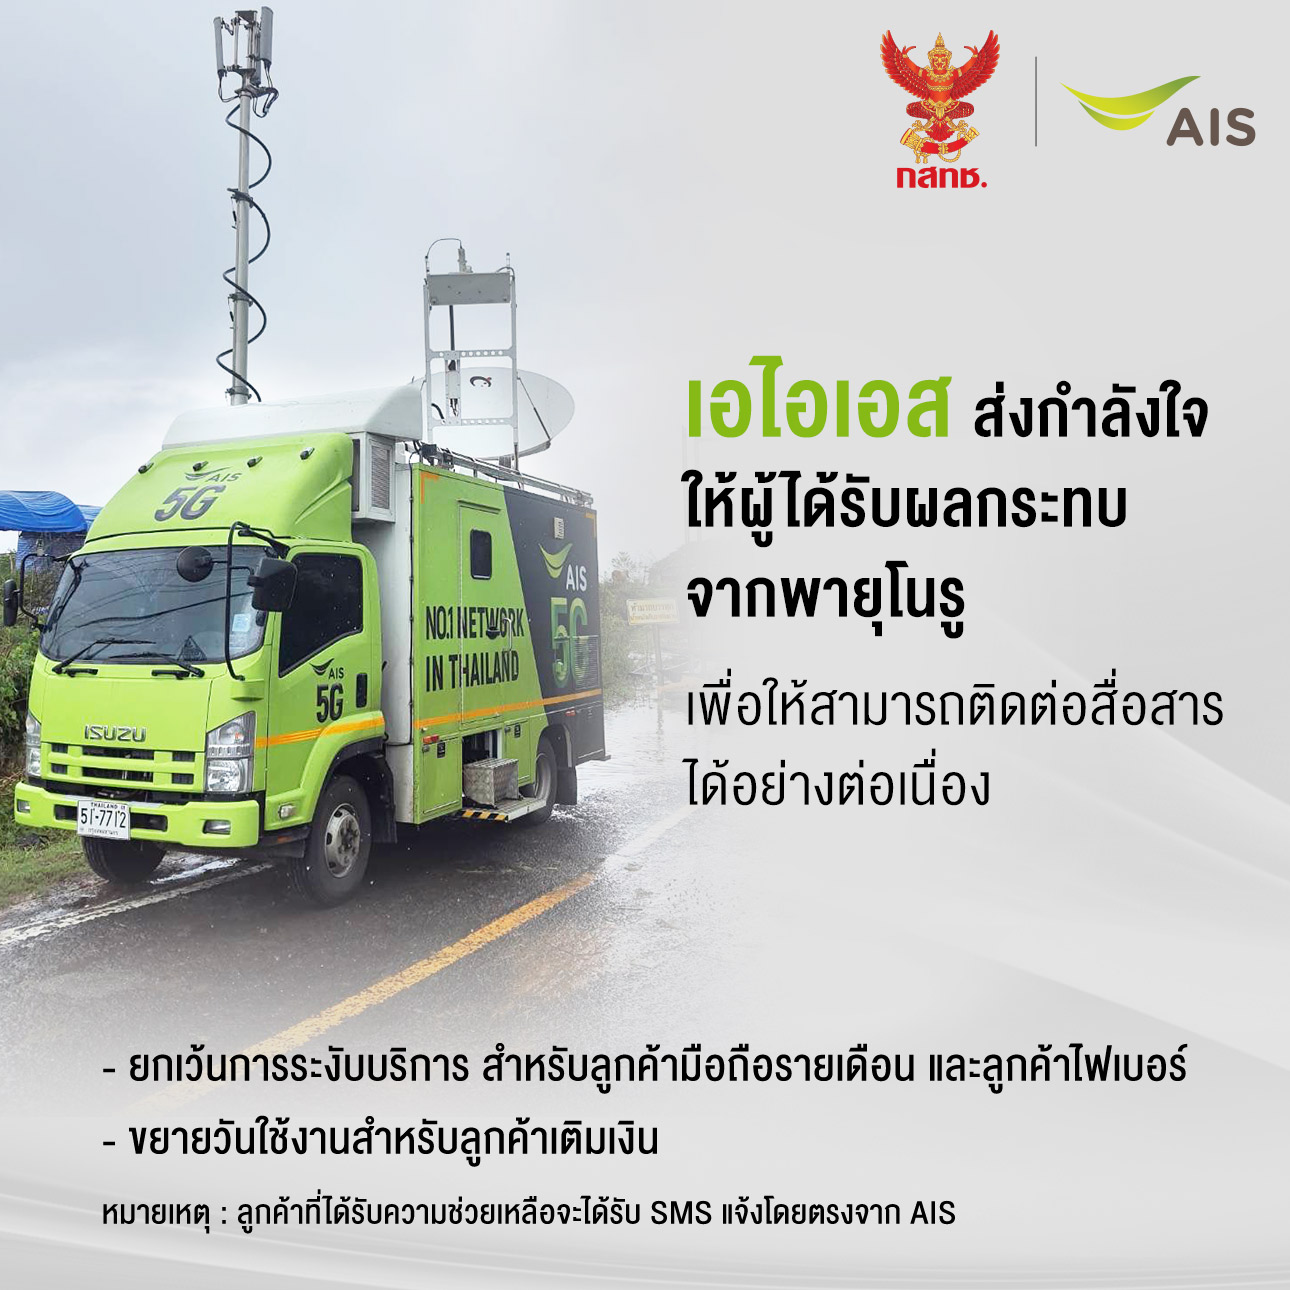 AIS ส่งกำลังใจ พร้อมมอบความช่วยเหลือประชาชน ในพื้นที่ประสบภัยน้ำท่วม จากผลกระทบของพายุโนรู เพื่อให้สามารถติดต่อสื่อสารได้อย่างต่อเนื่อง